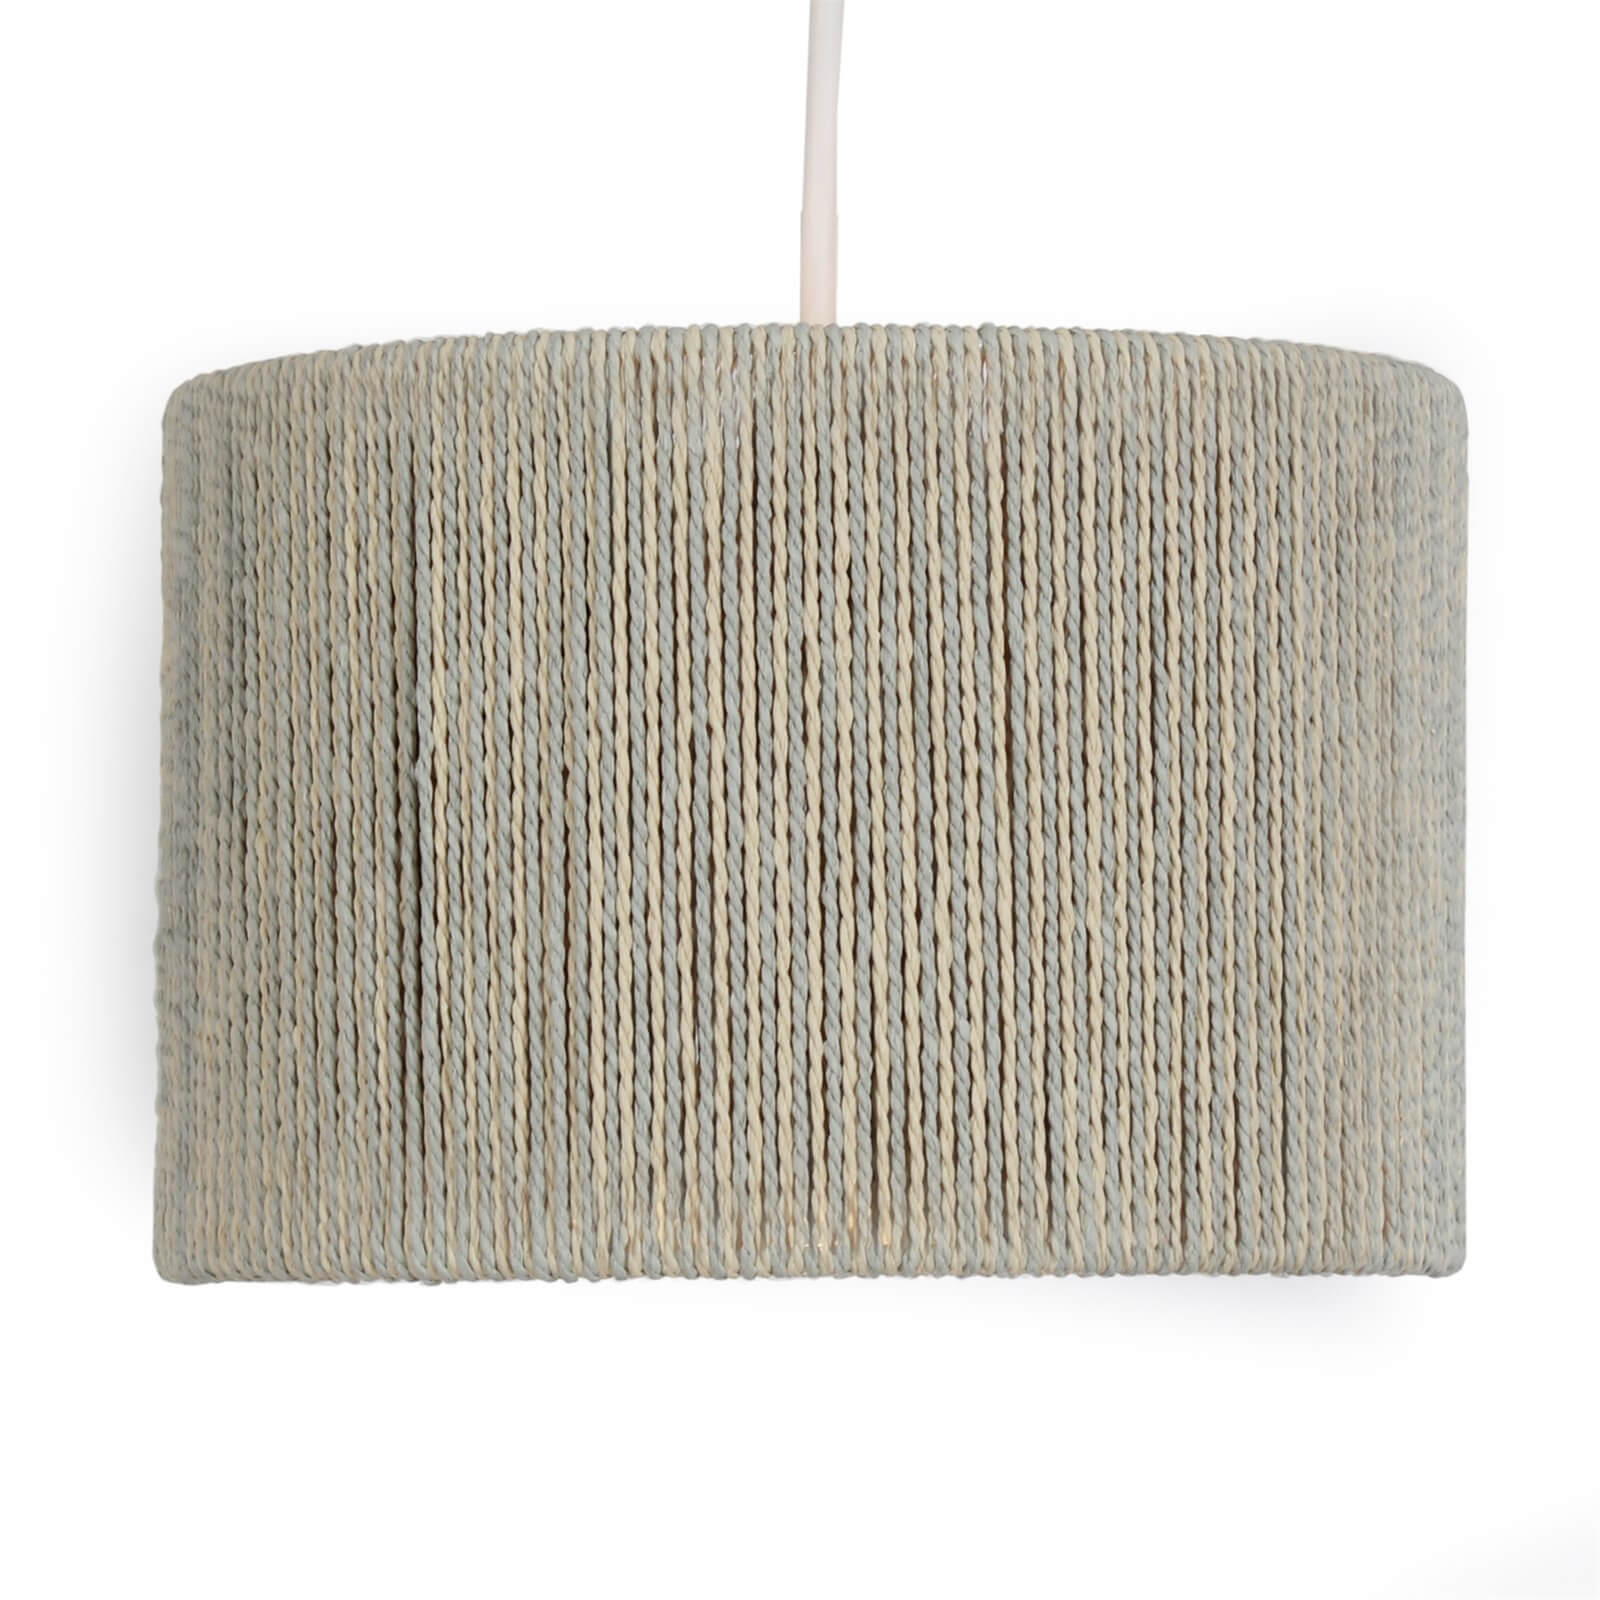 Lexi String Lamp Shade - Grey & Ivory - 25cm